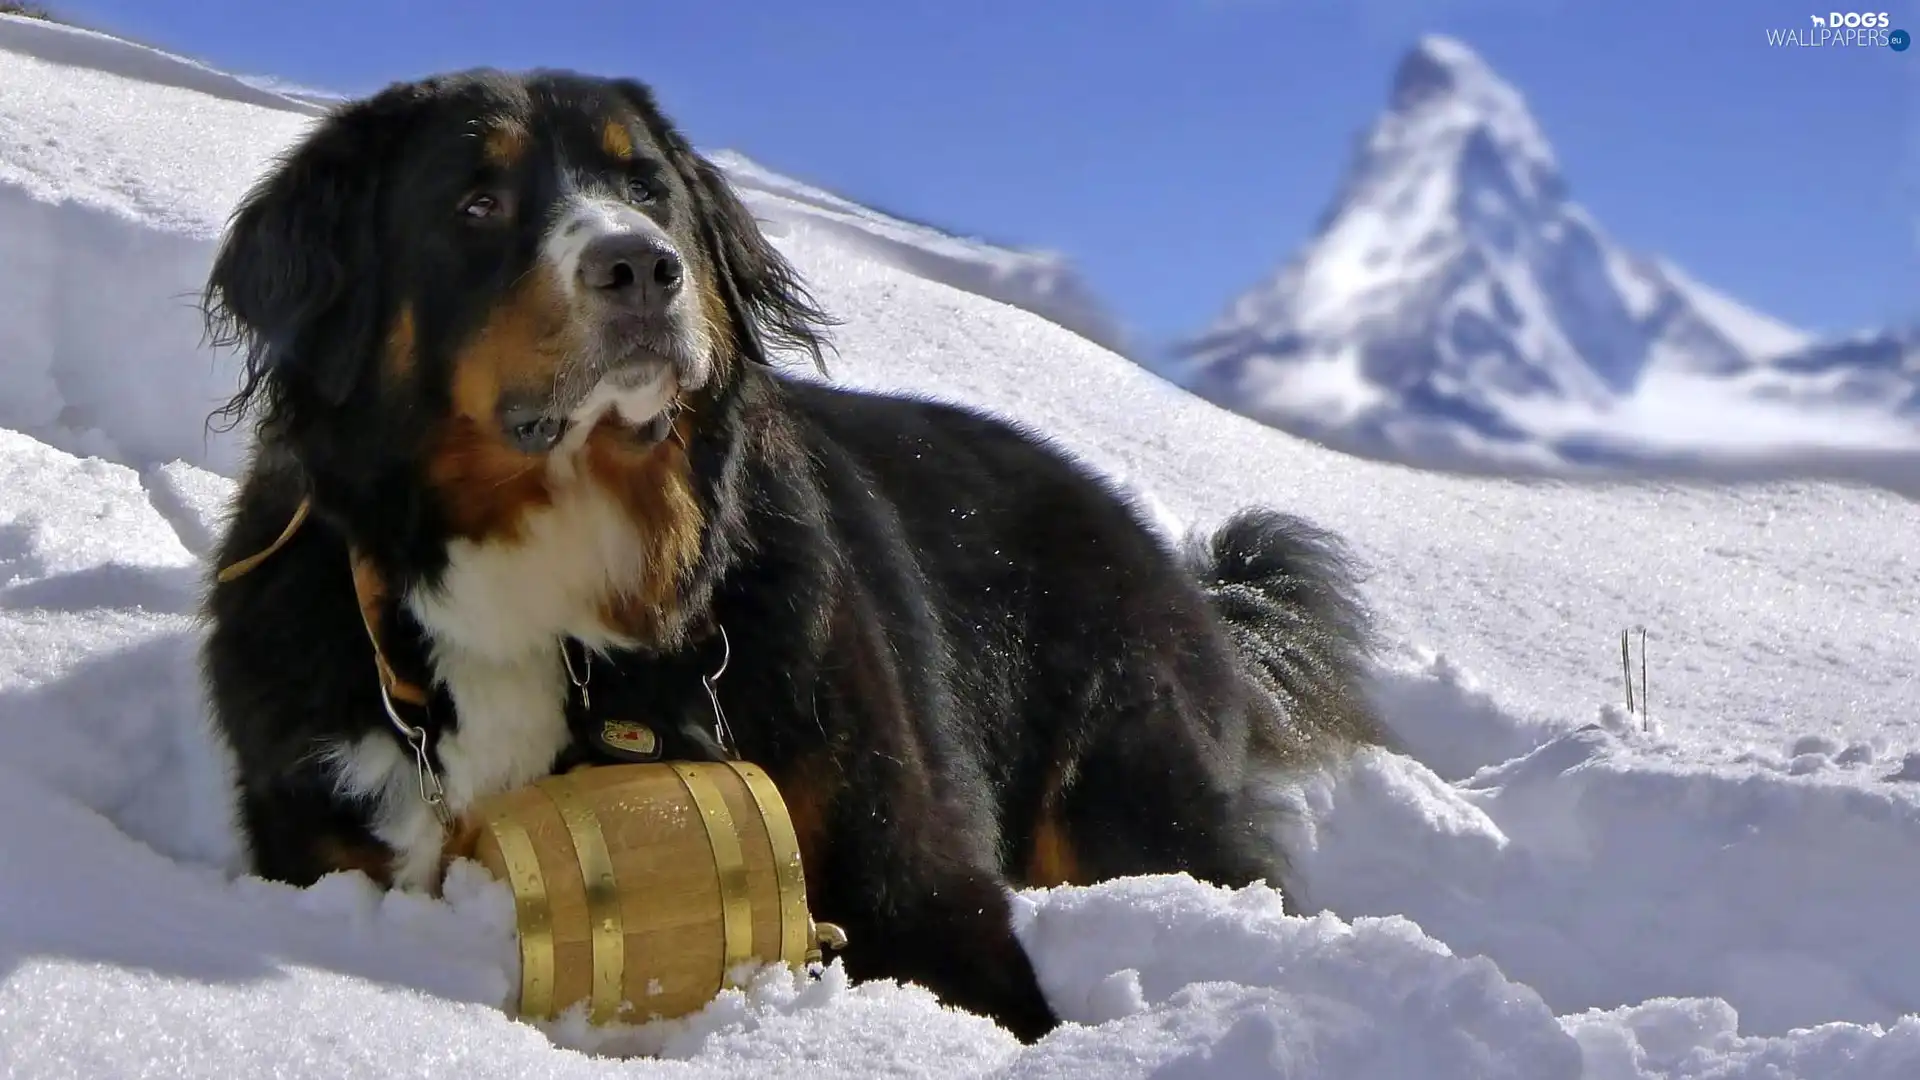 barrel, snow, dog